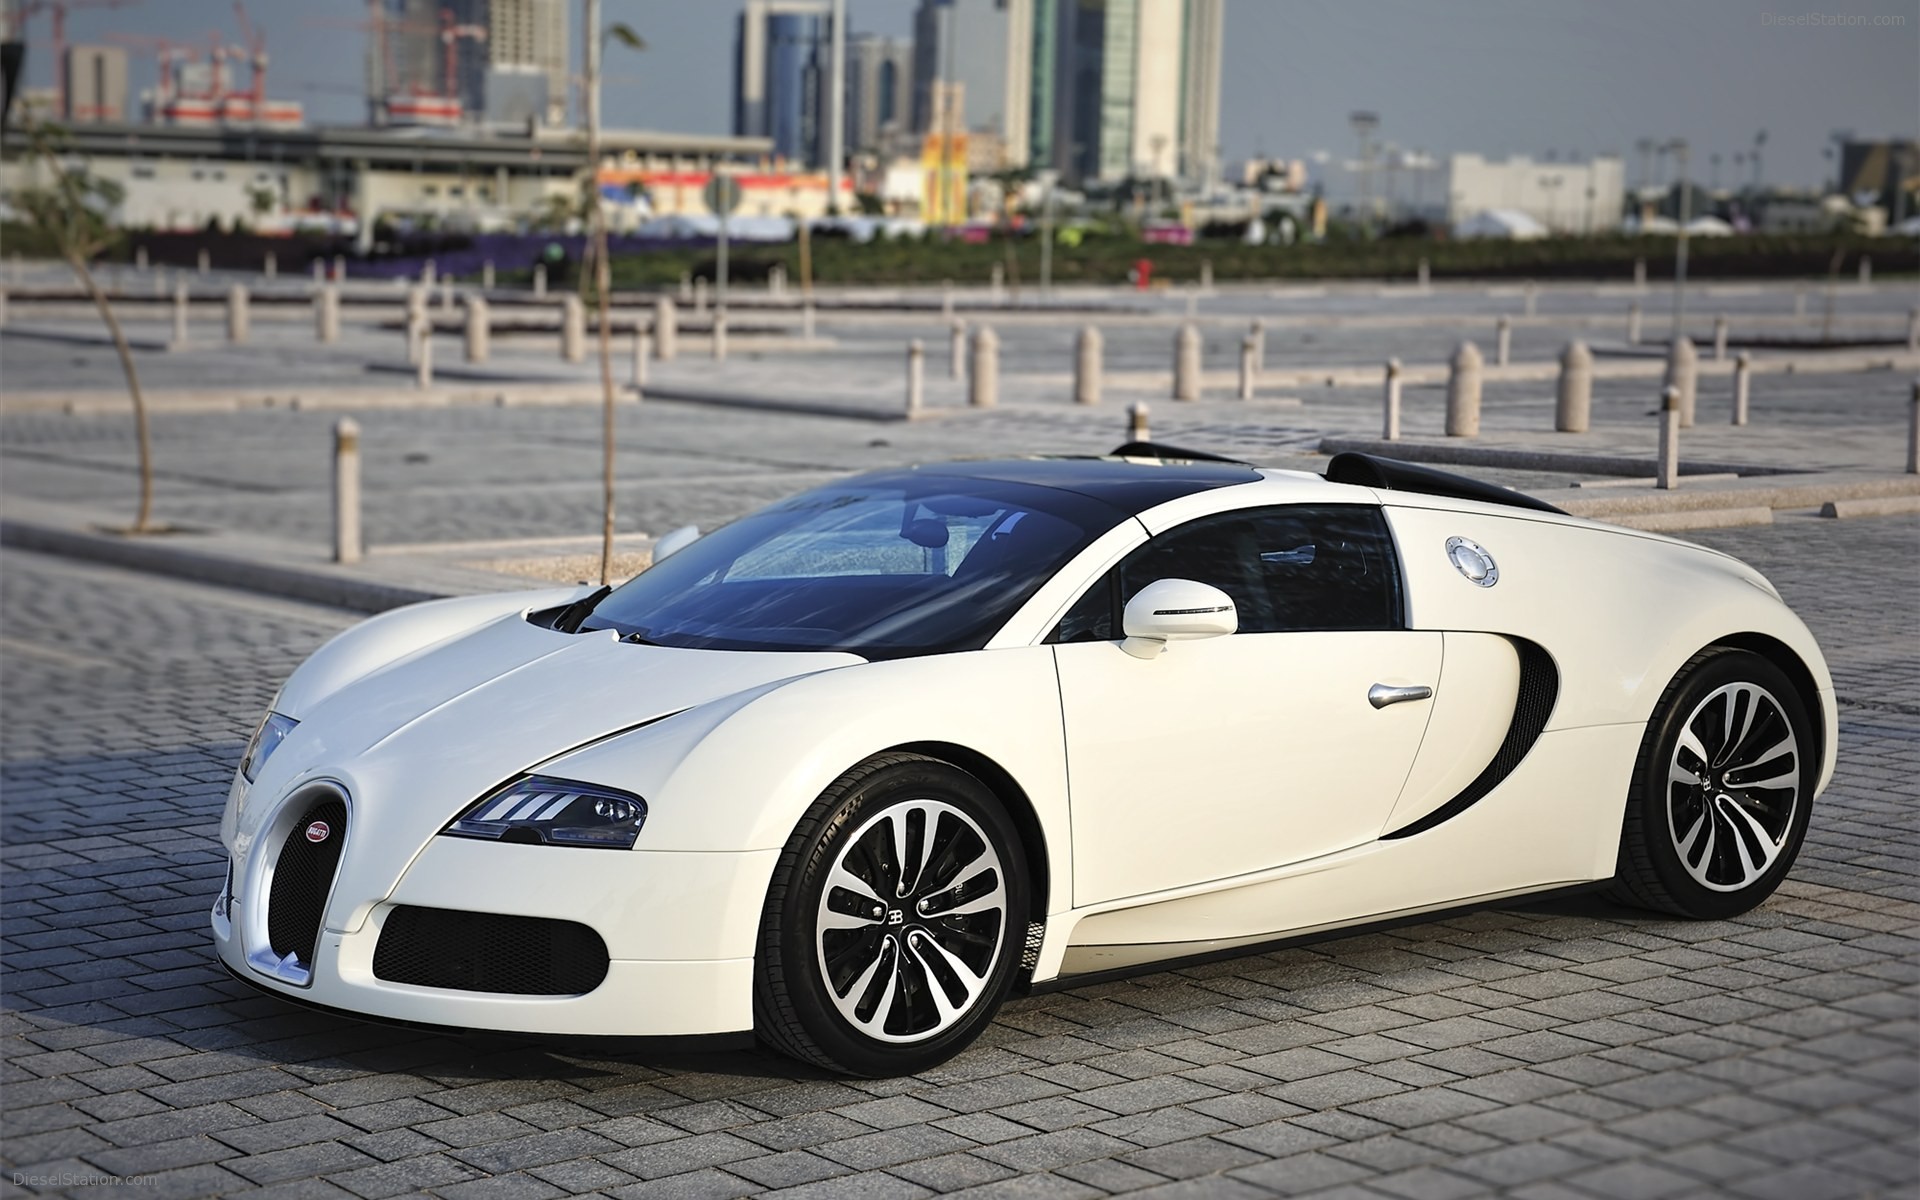 Bugatti Veyron 16.4 Grand Sport Backgrounds on Wallpapers Vista